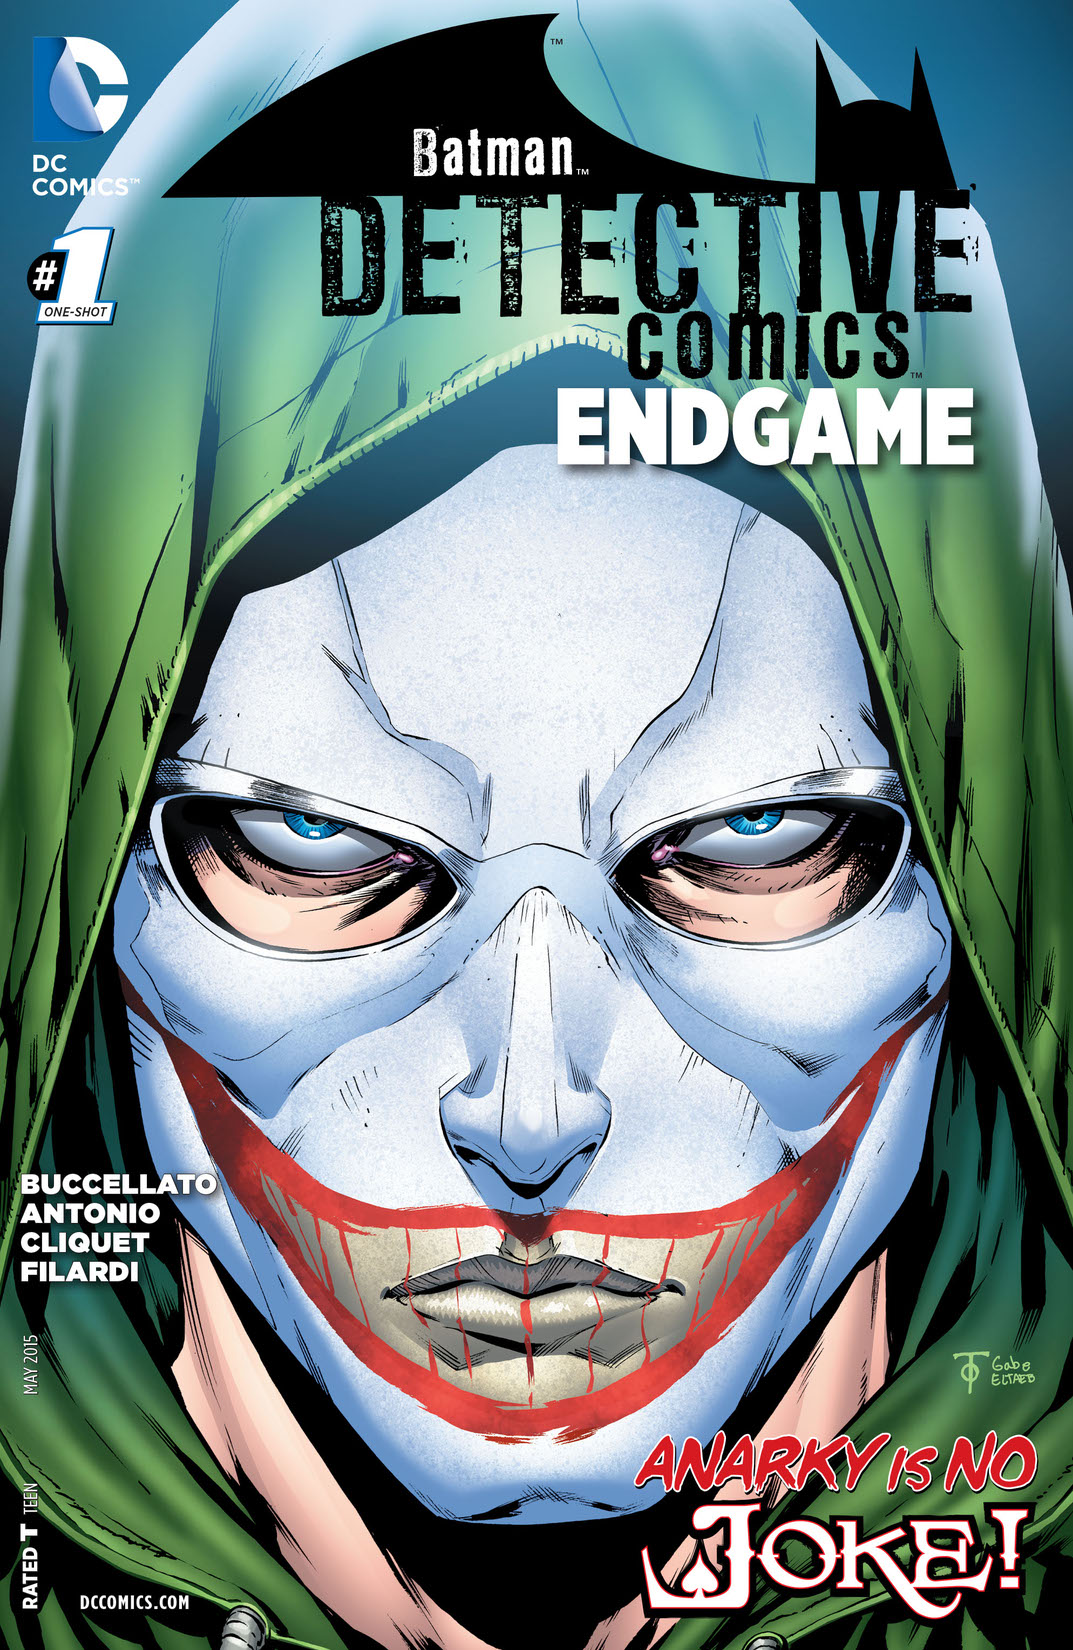 Detective Comics: Endgame (2015-) #1 preview images